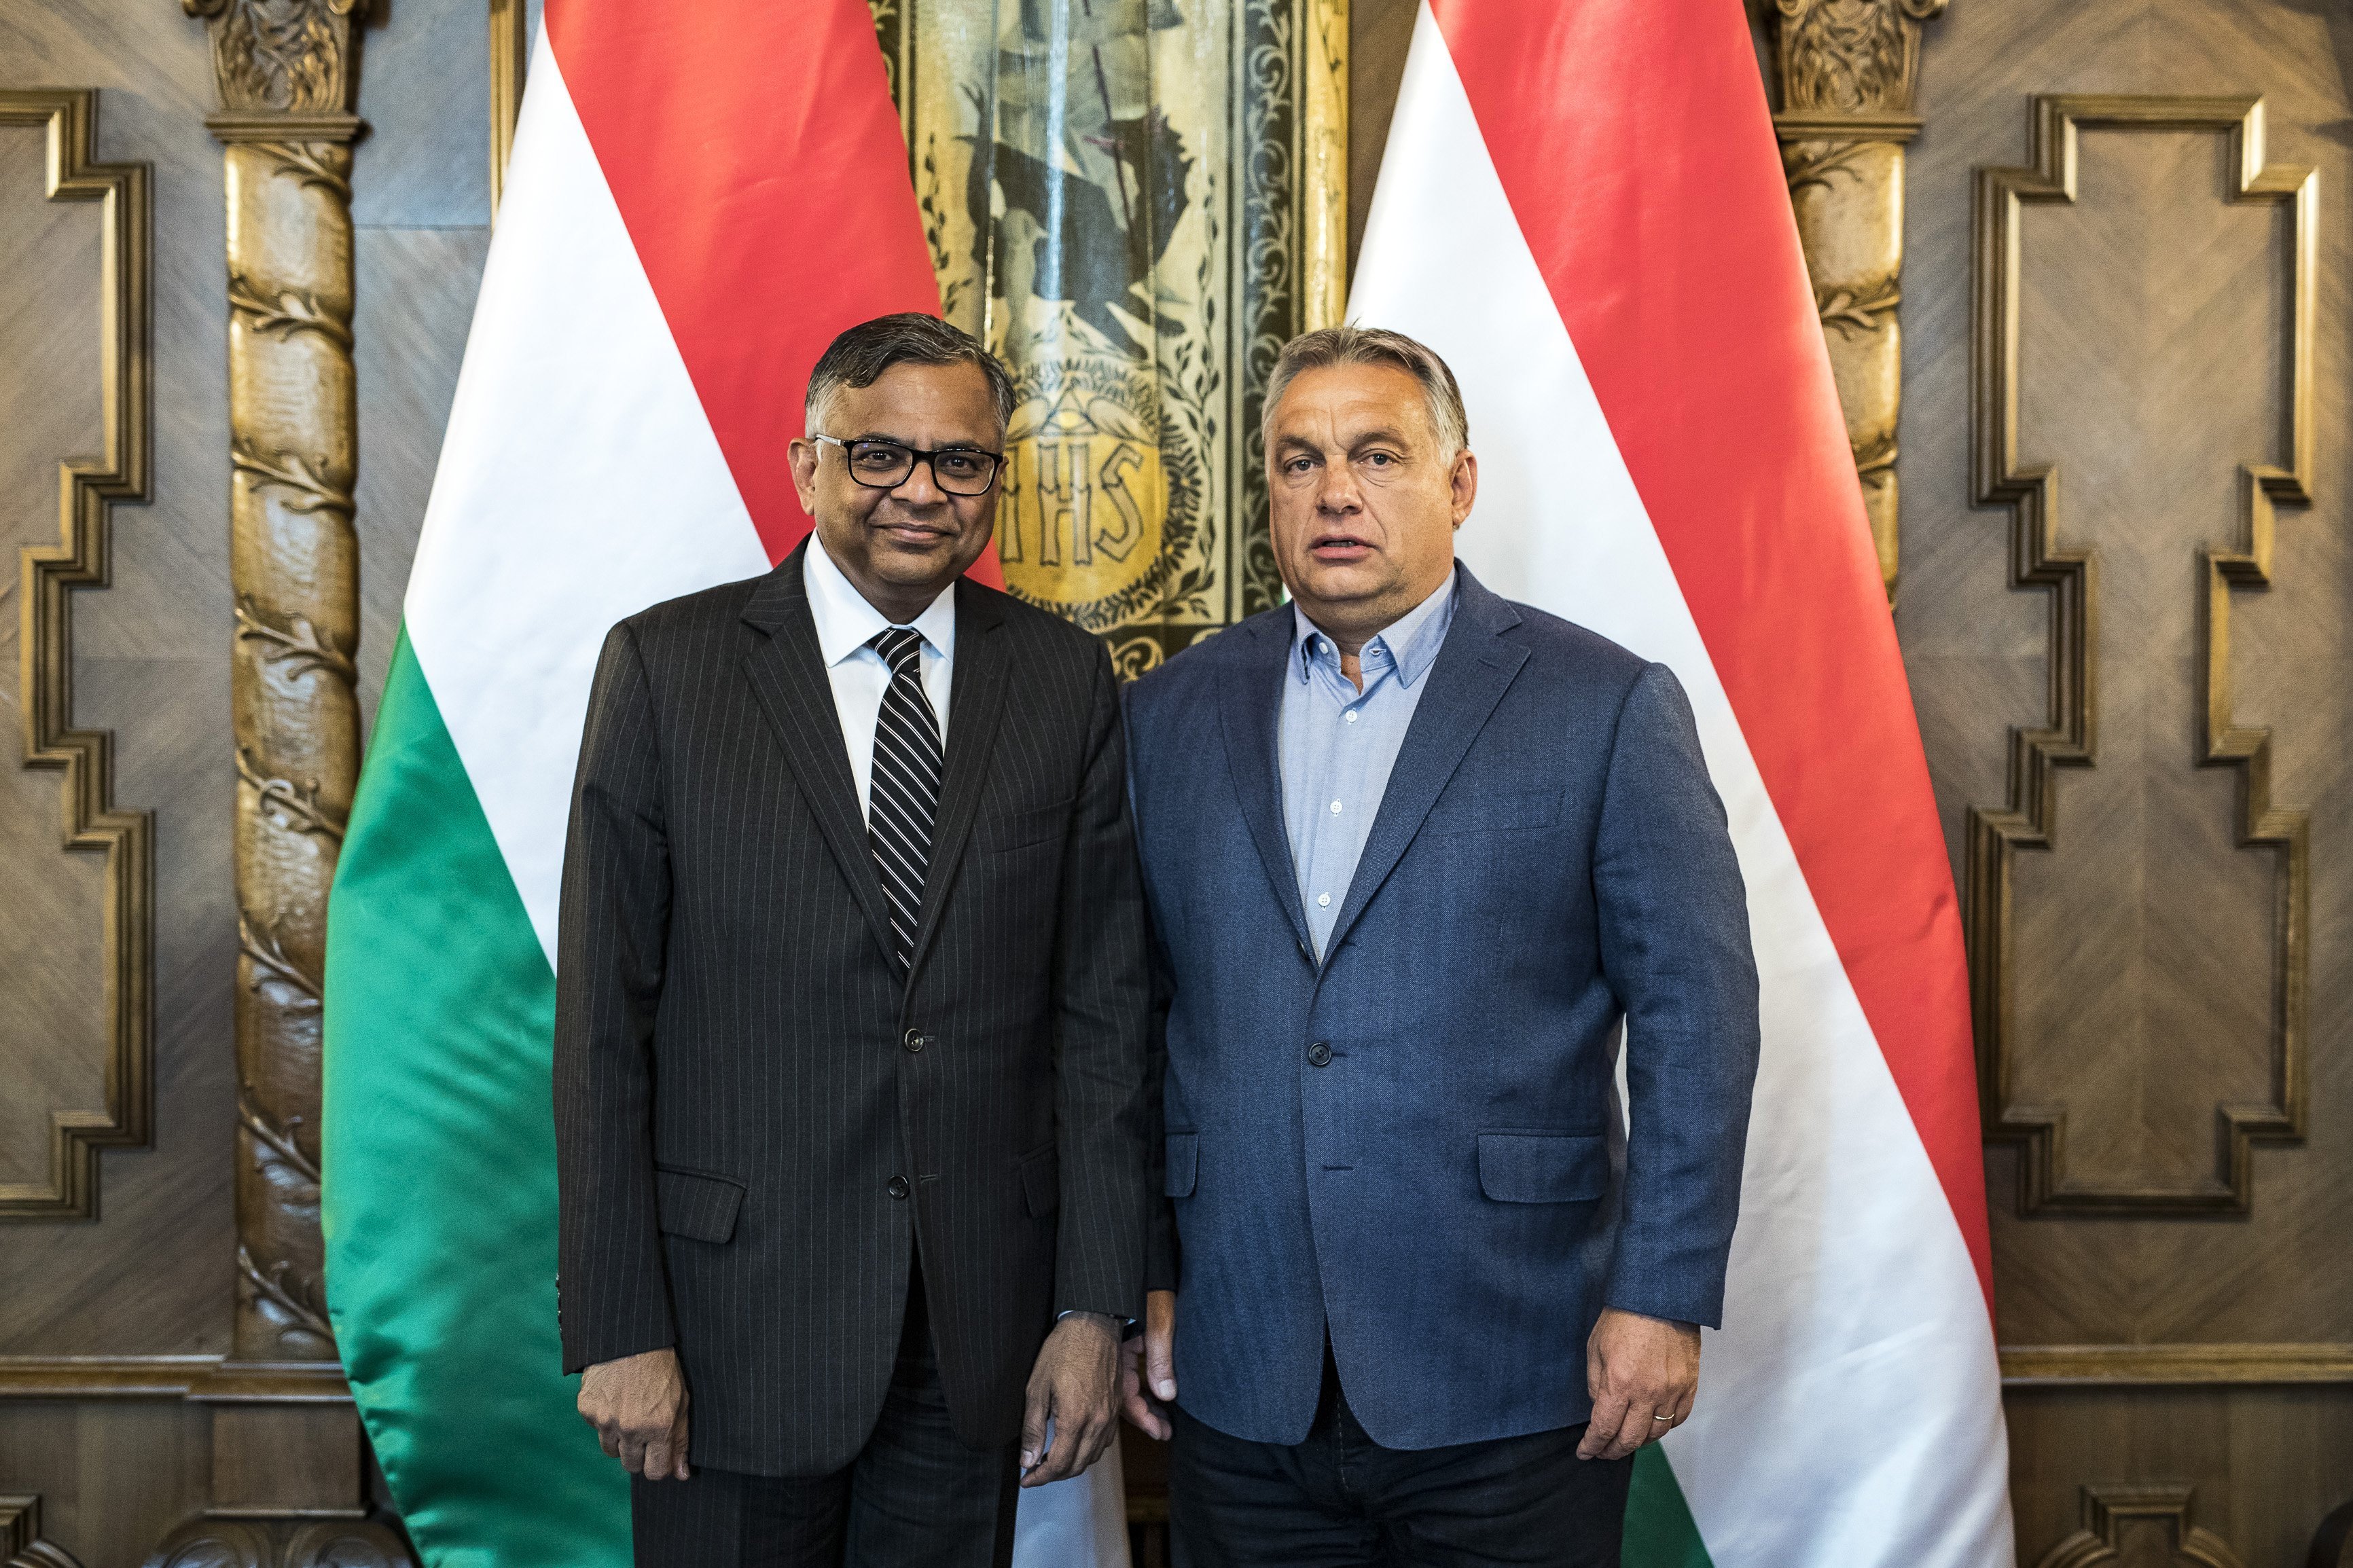 Orbán papa fogadta a Tata-főnököt